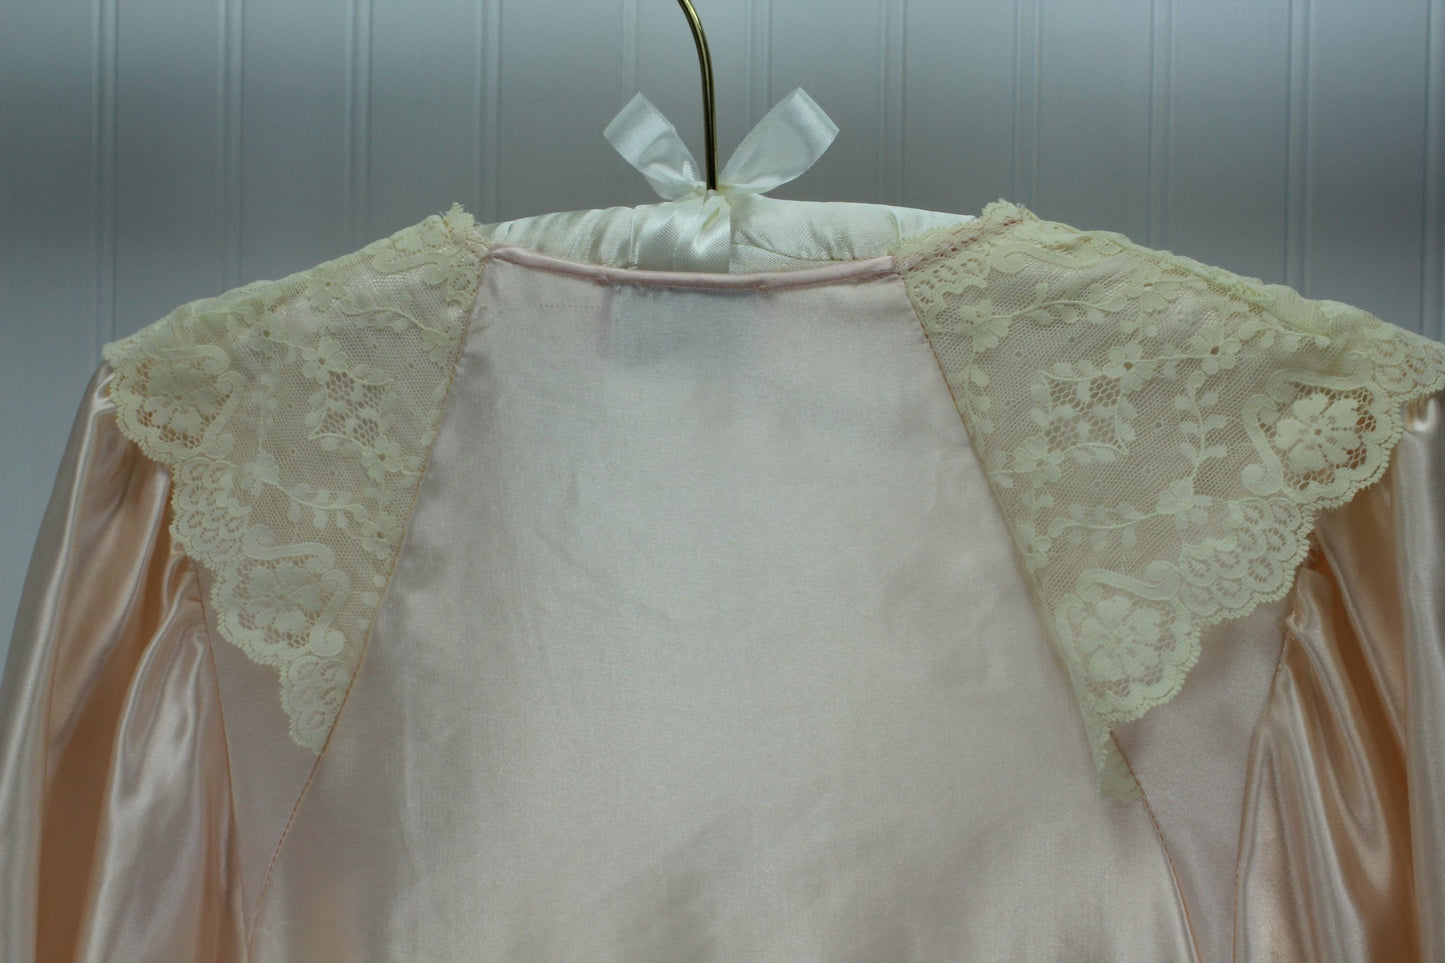 Donna Richard Nightgown Blush Pink Polyester Cotton Lace Collar Size Medium lounge robe